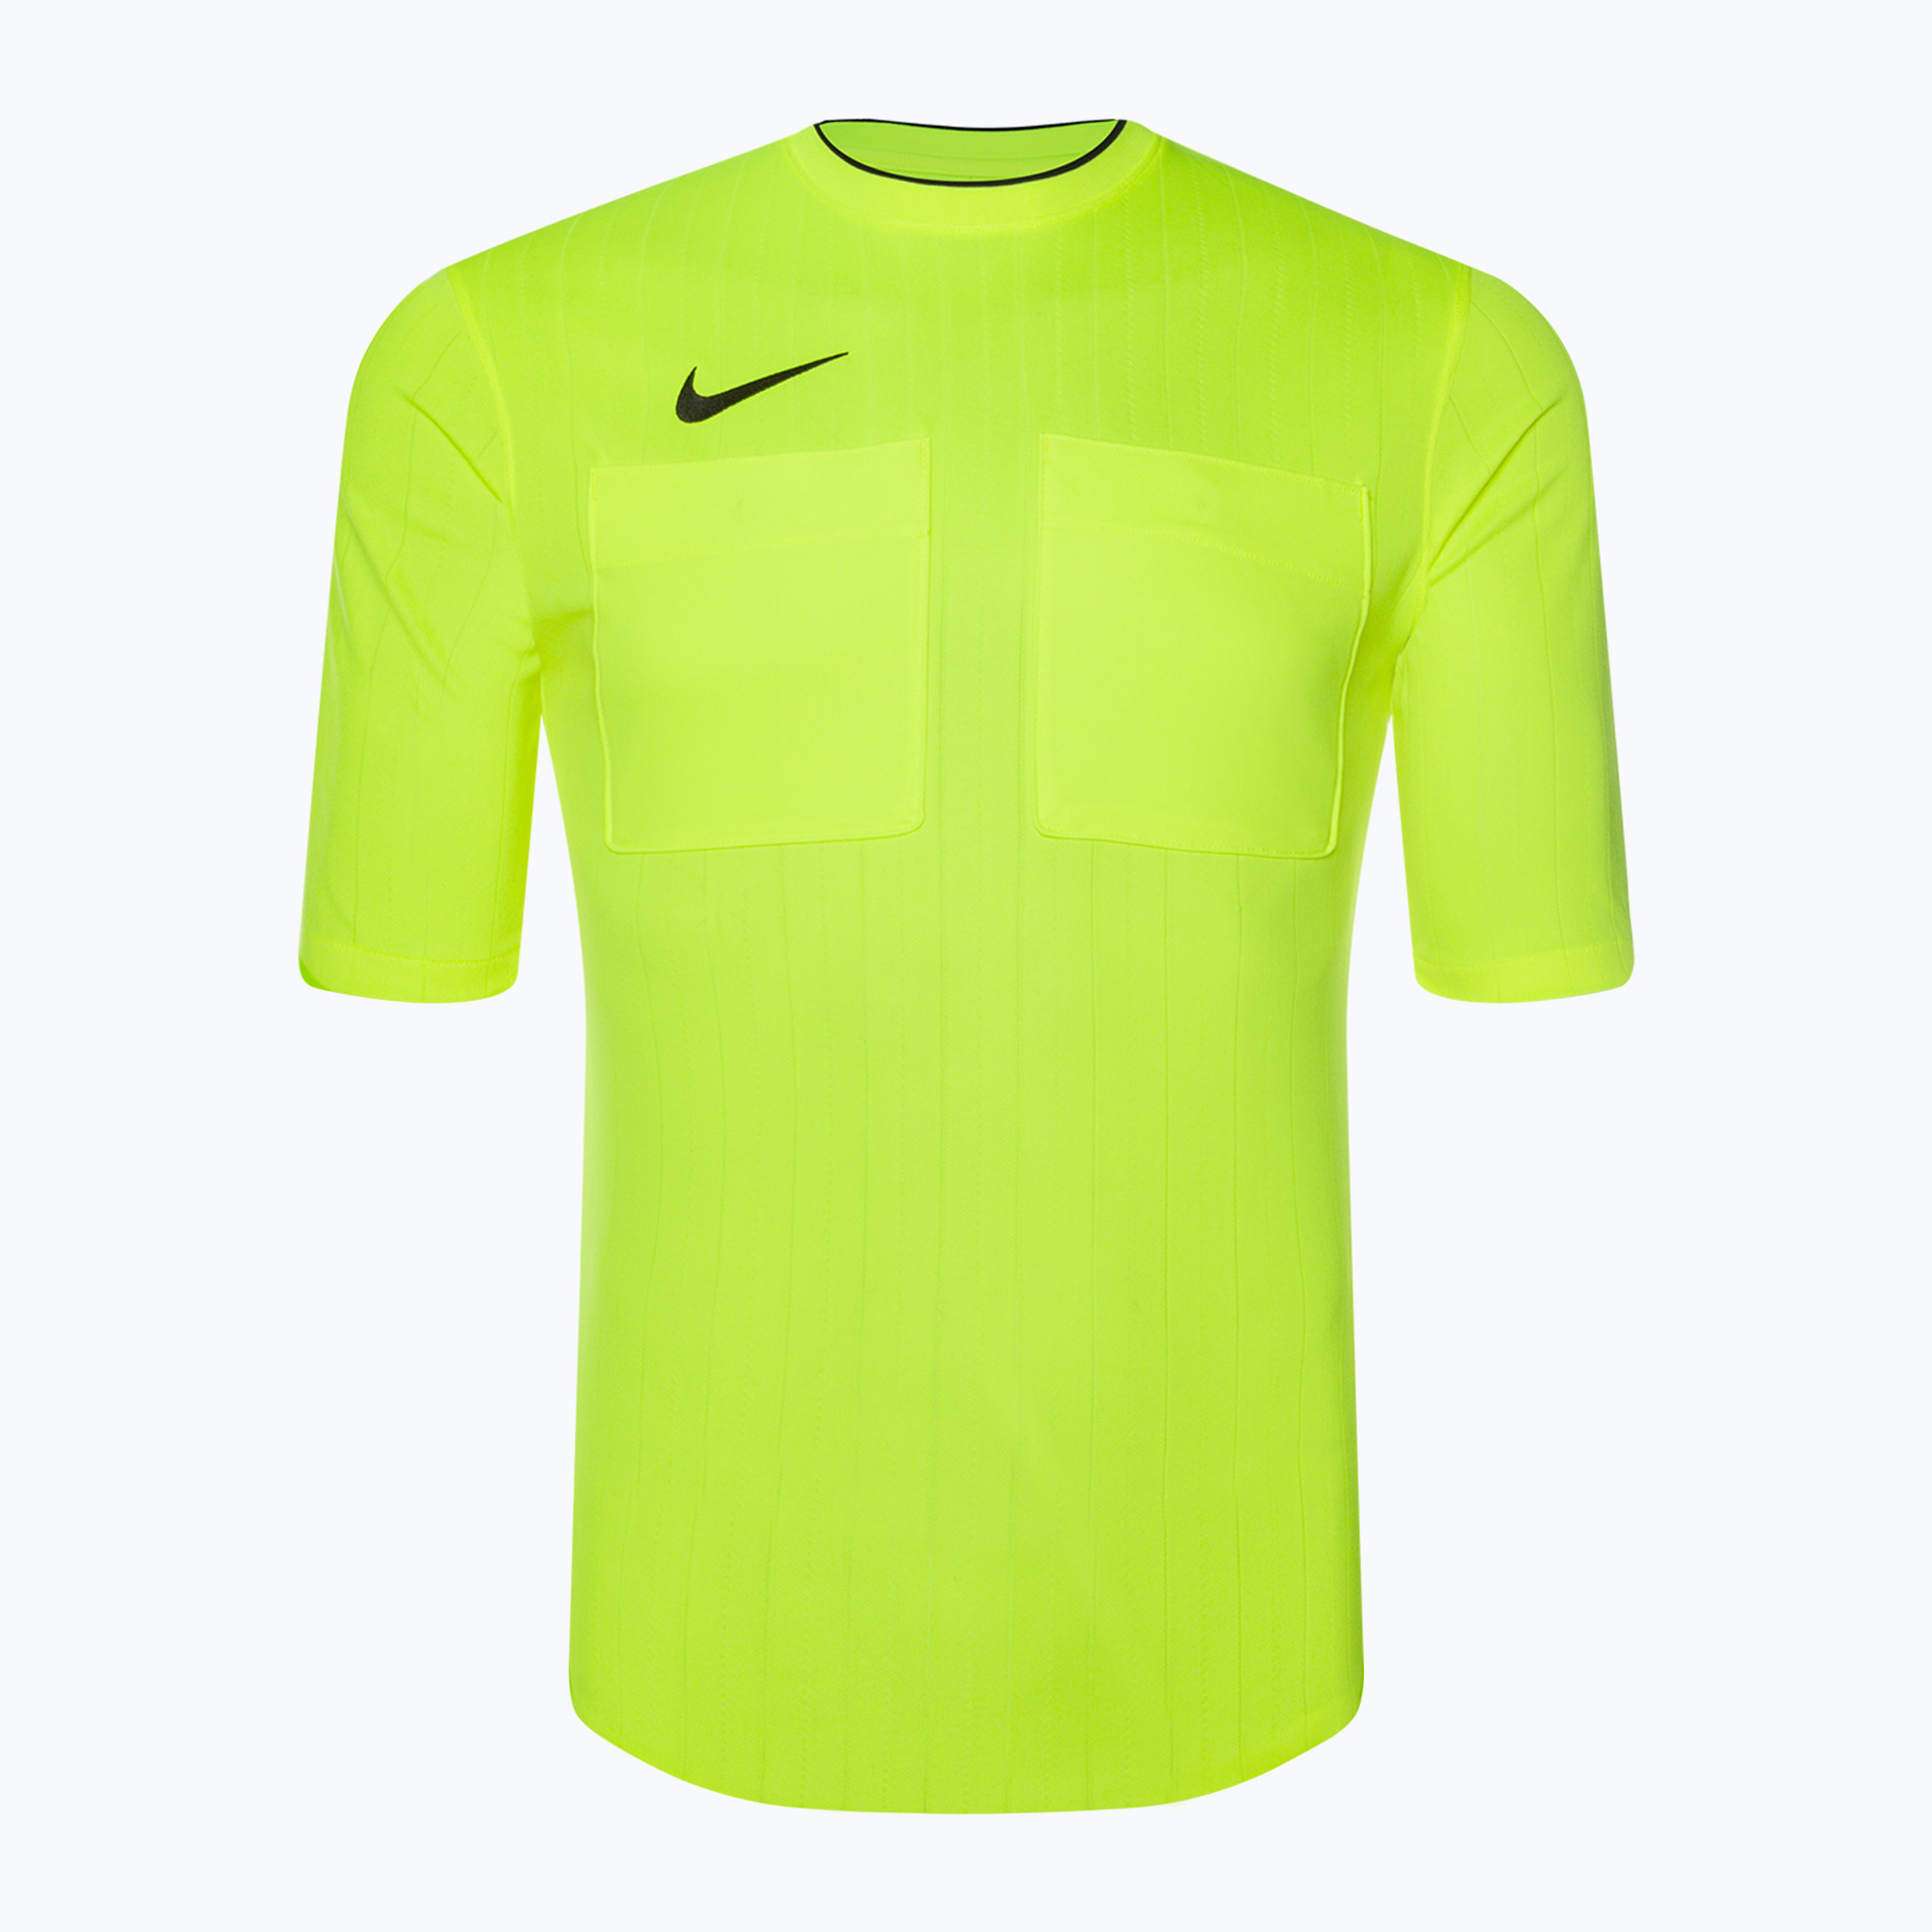 Pánske futbalové tričko Nike Dri-FIT Referee II volt/black